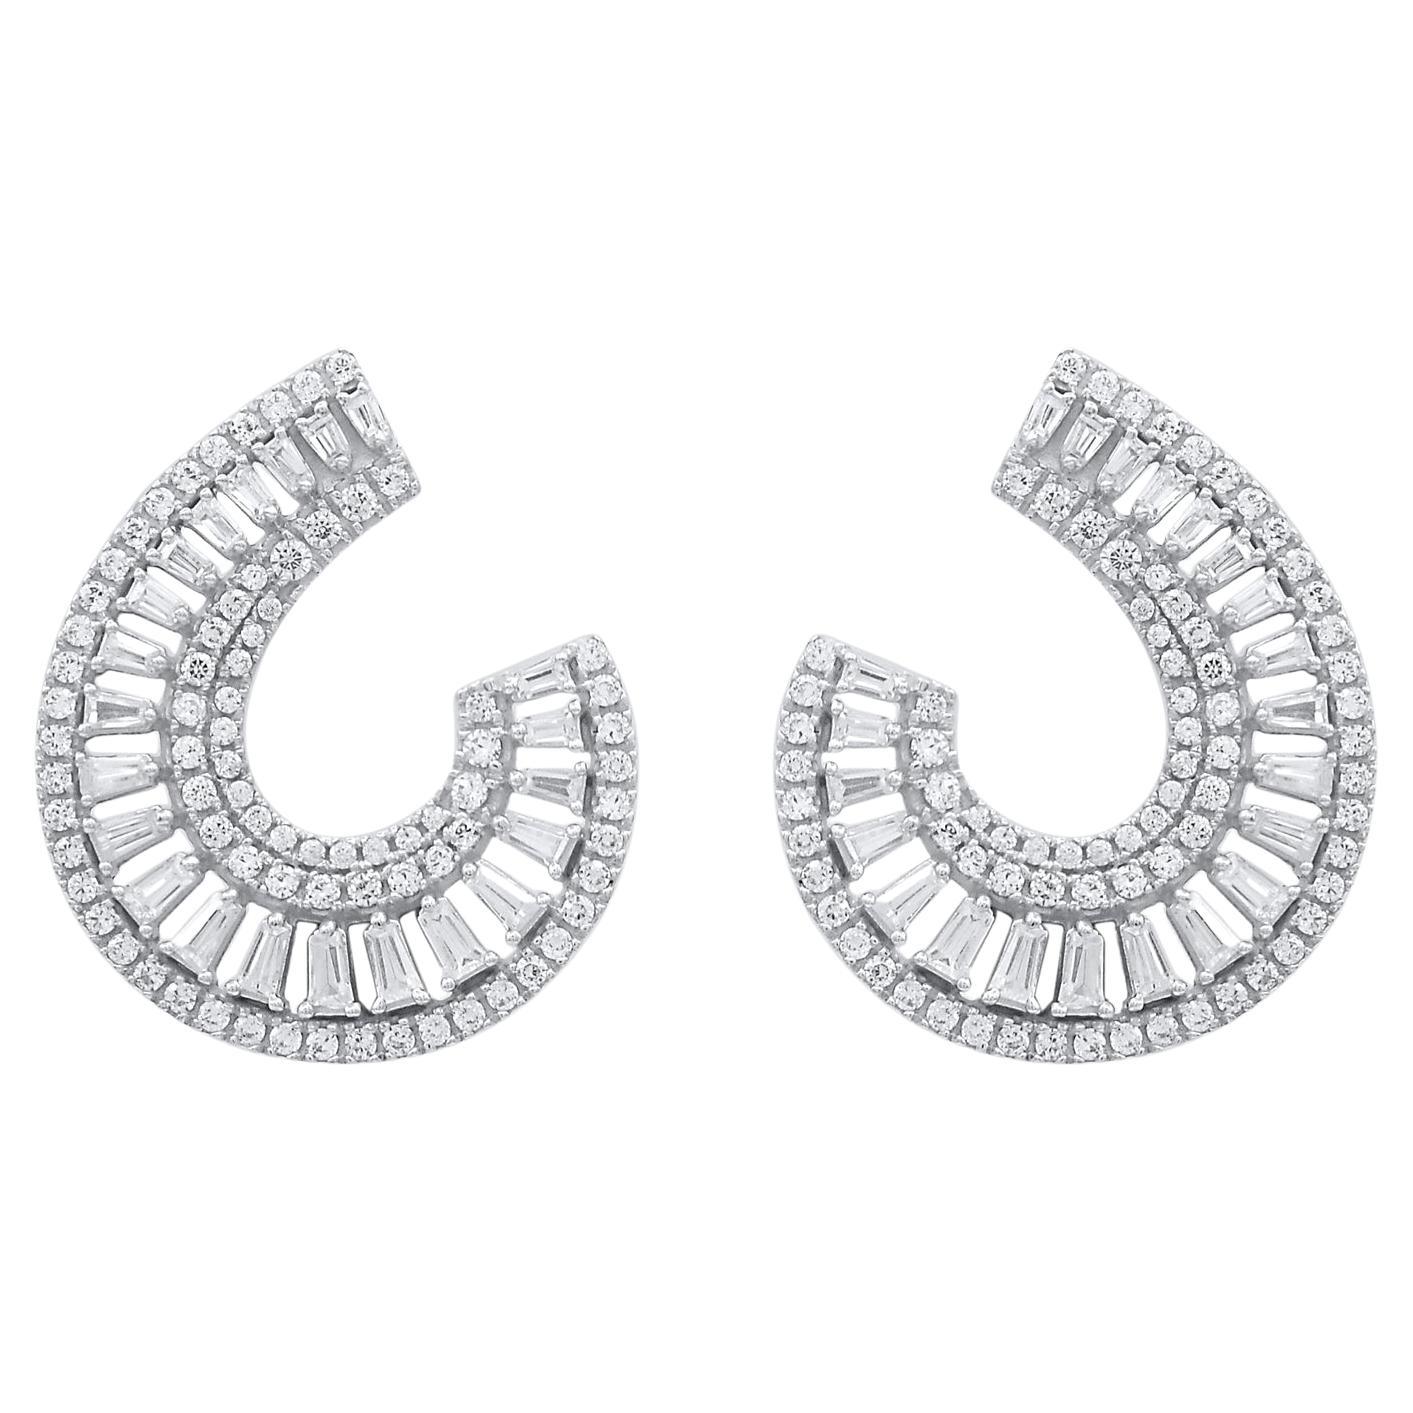 TJD 1.0 Carat Round & Baguette Cut Diamond 18 Karat White Gold Stud Earrings For Sale